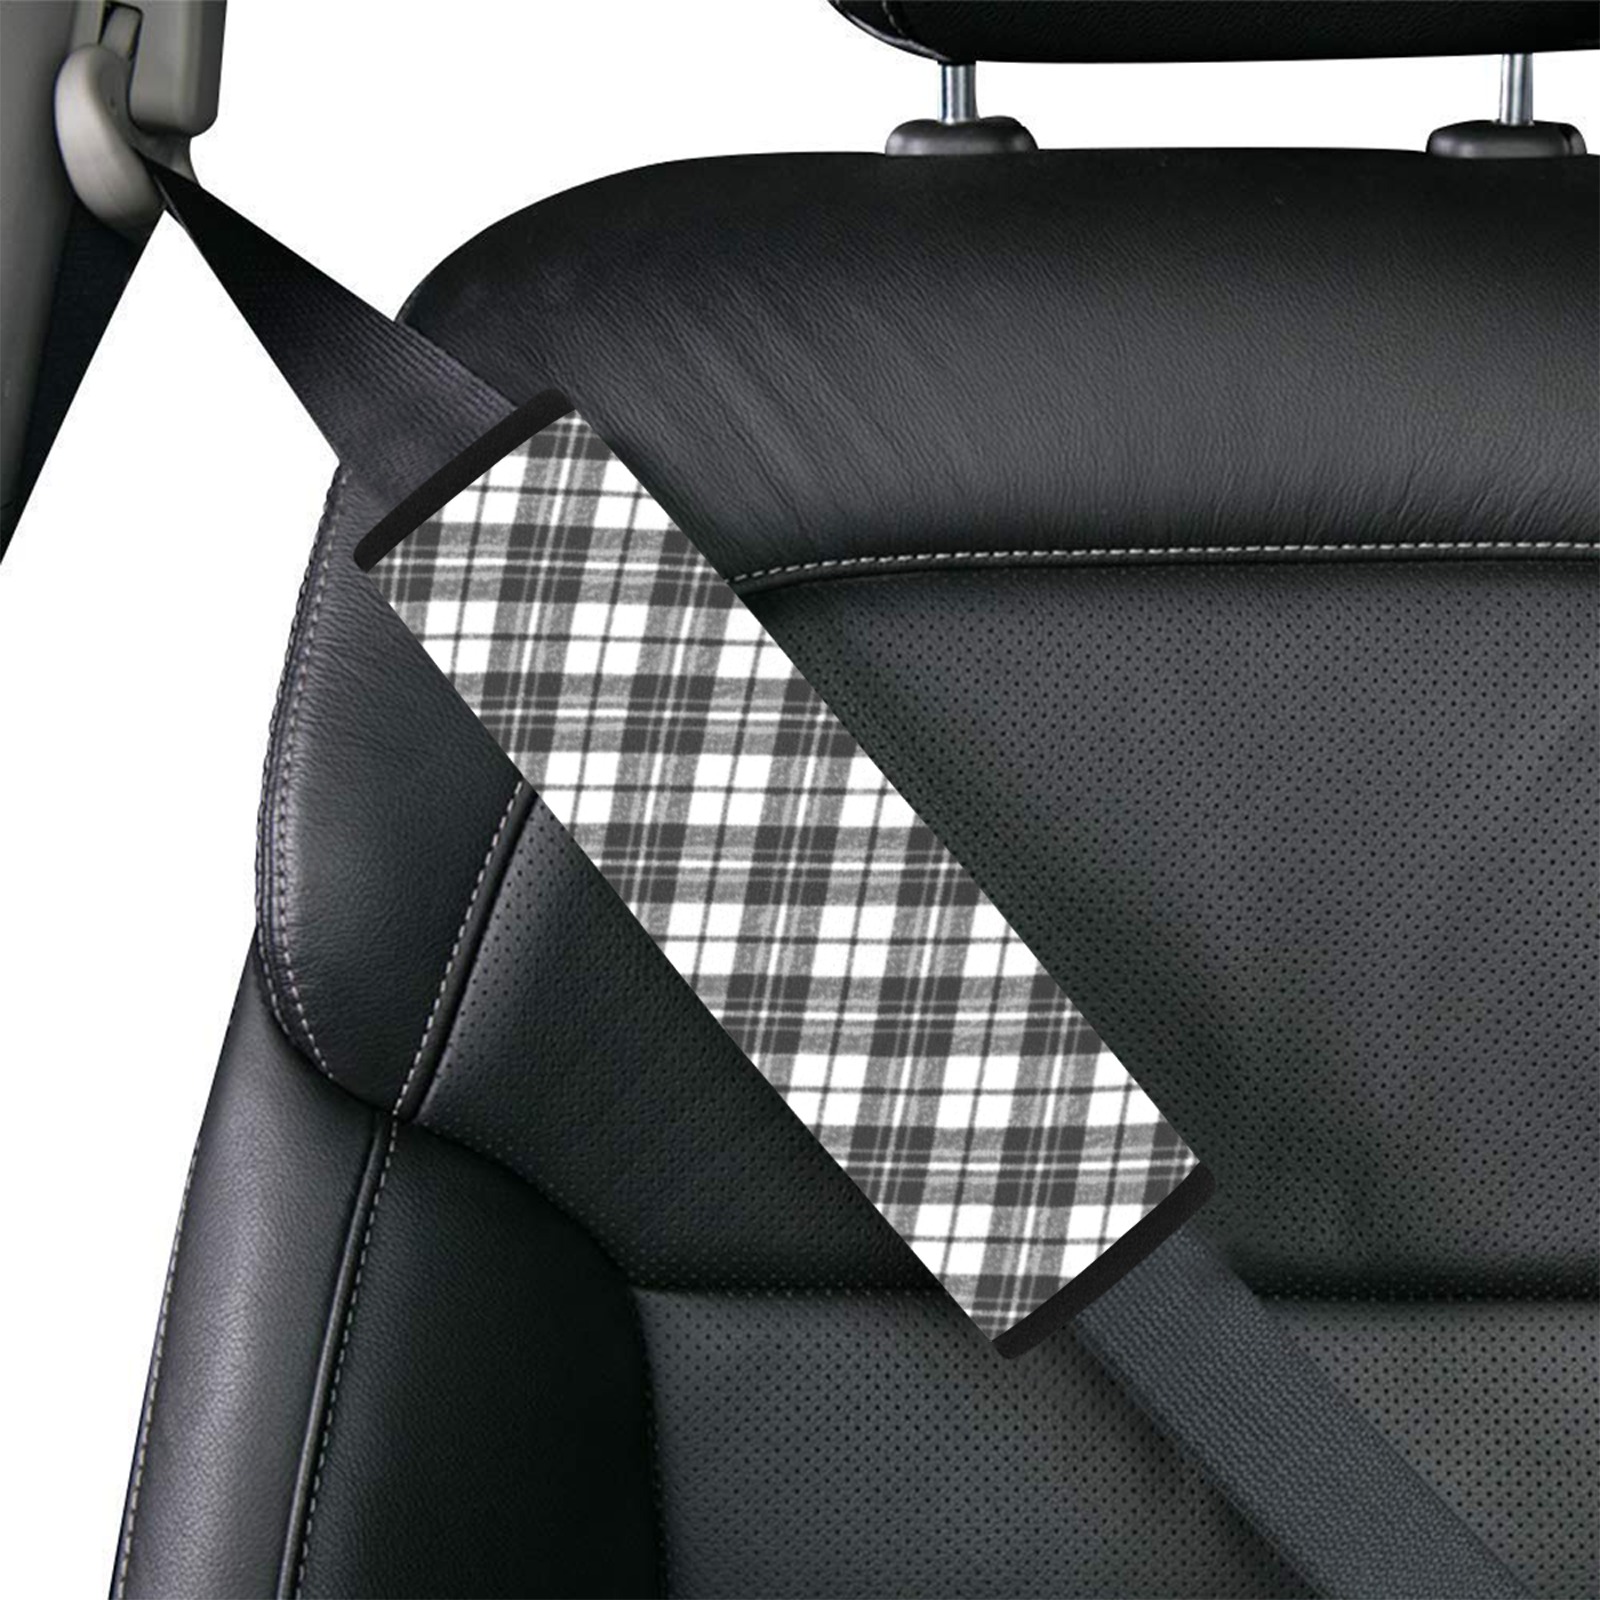 Tartan black white pattern holidays Christmas xmas elegant lines geometric cool fun classic elegance Car Seat Belt Cover 7''x10''